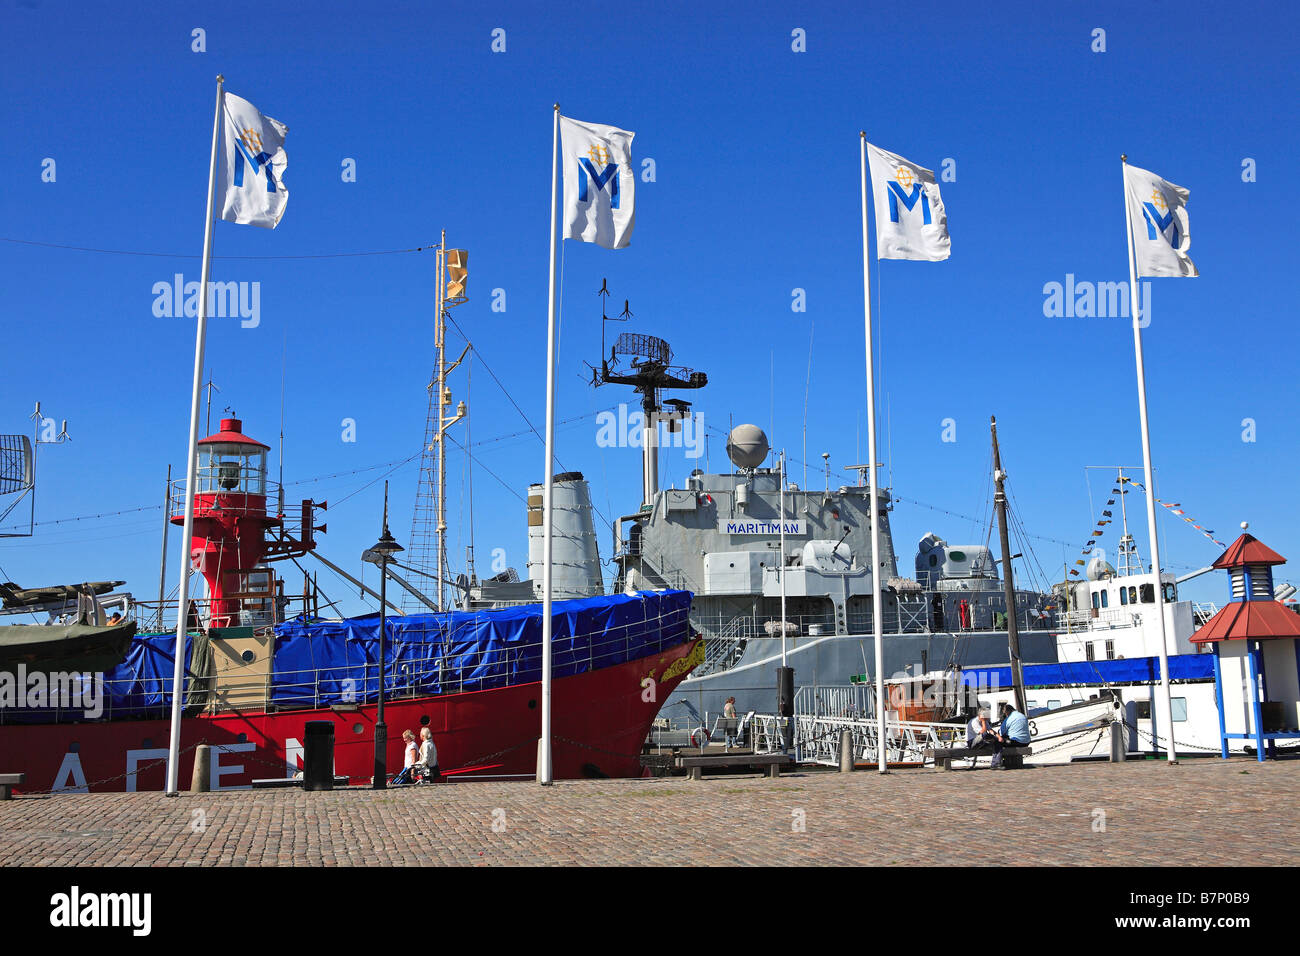 Sweden, Gothenburg, Goteborgs Maritima Centrum - Floating Ship Museum Stock Photo